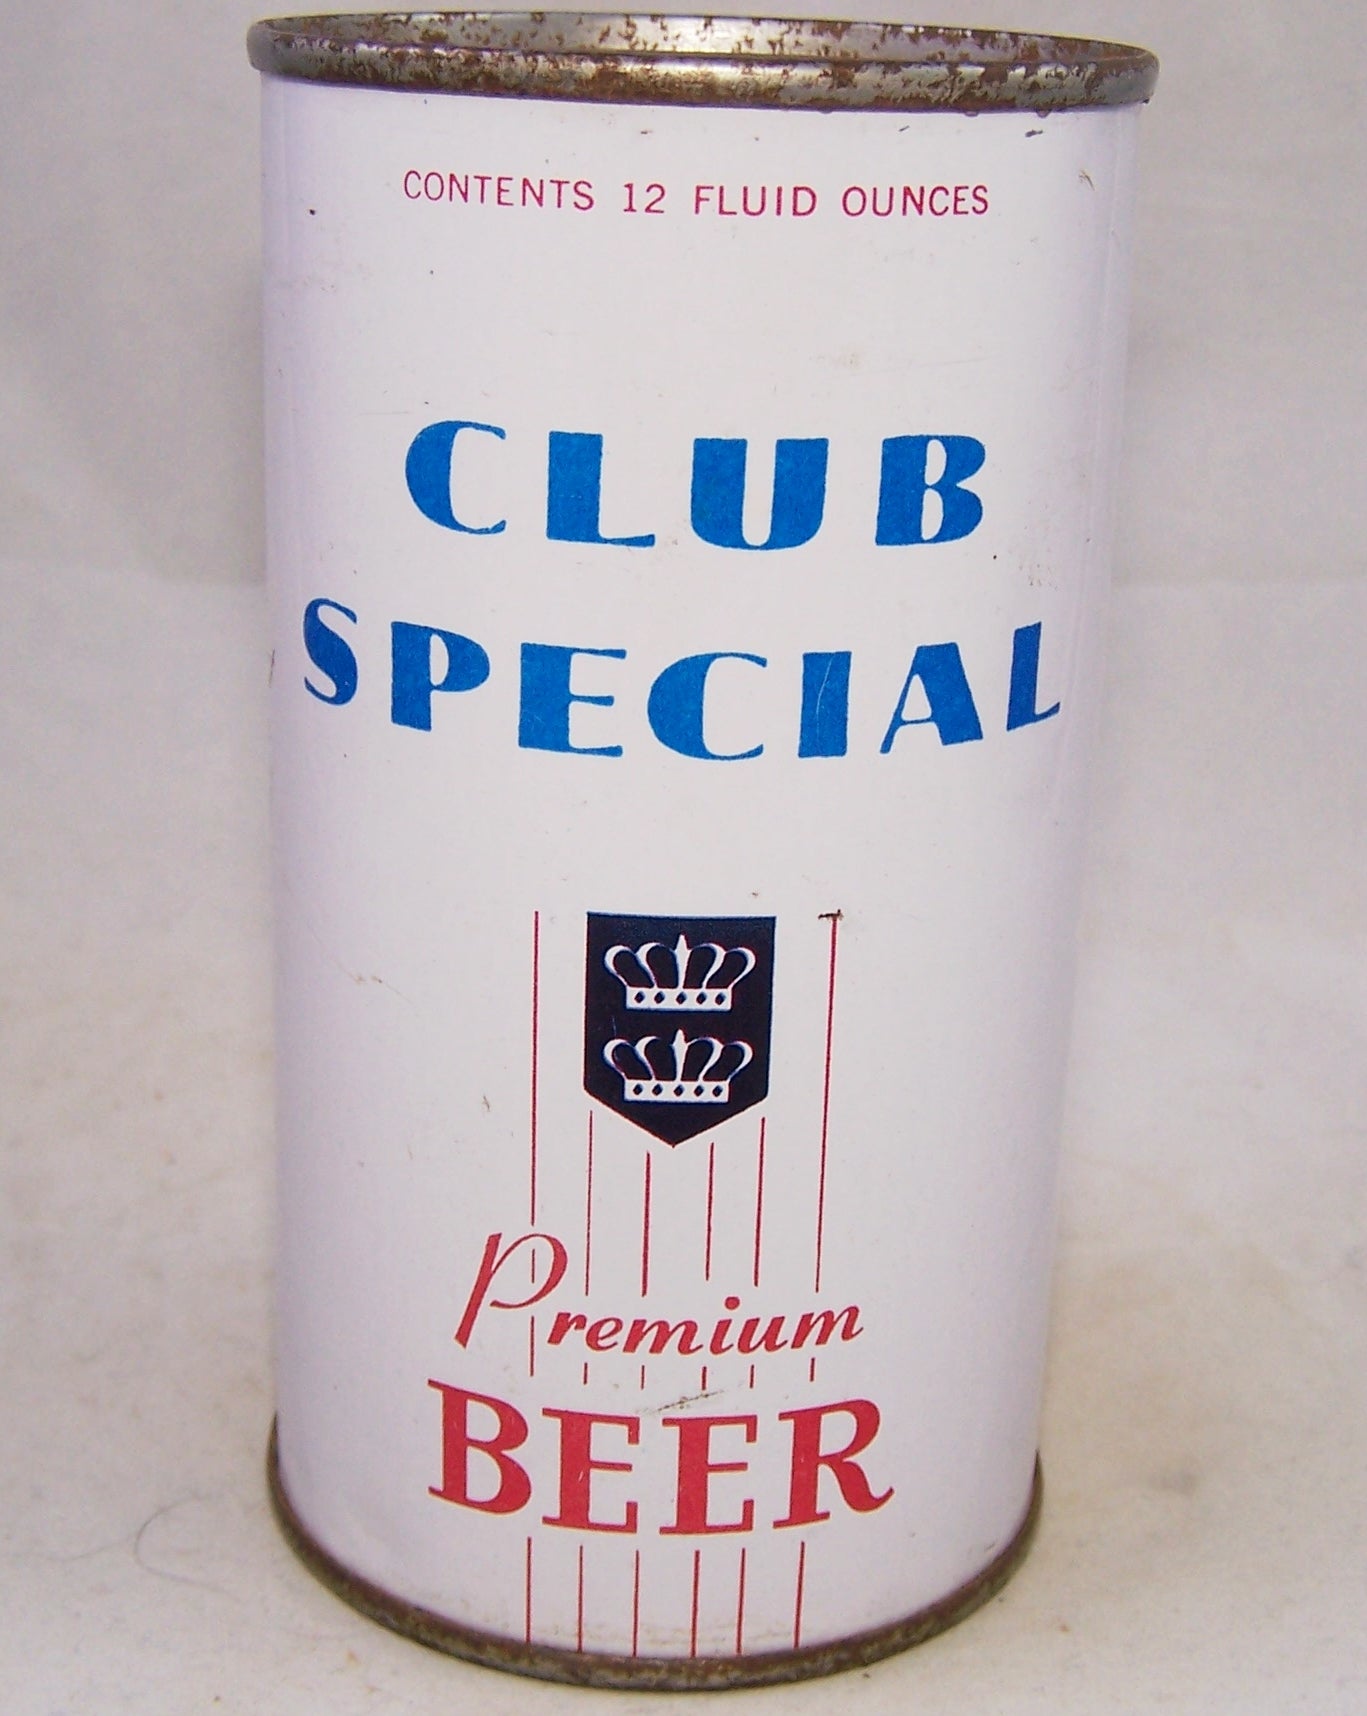 Club Special Premium Beer, USBC 49-36 Grade 1 Sold on 05/20/18